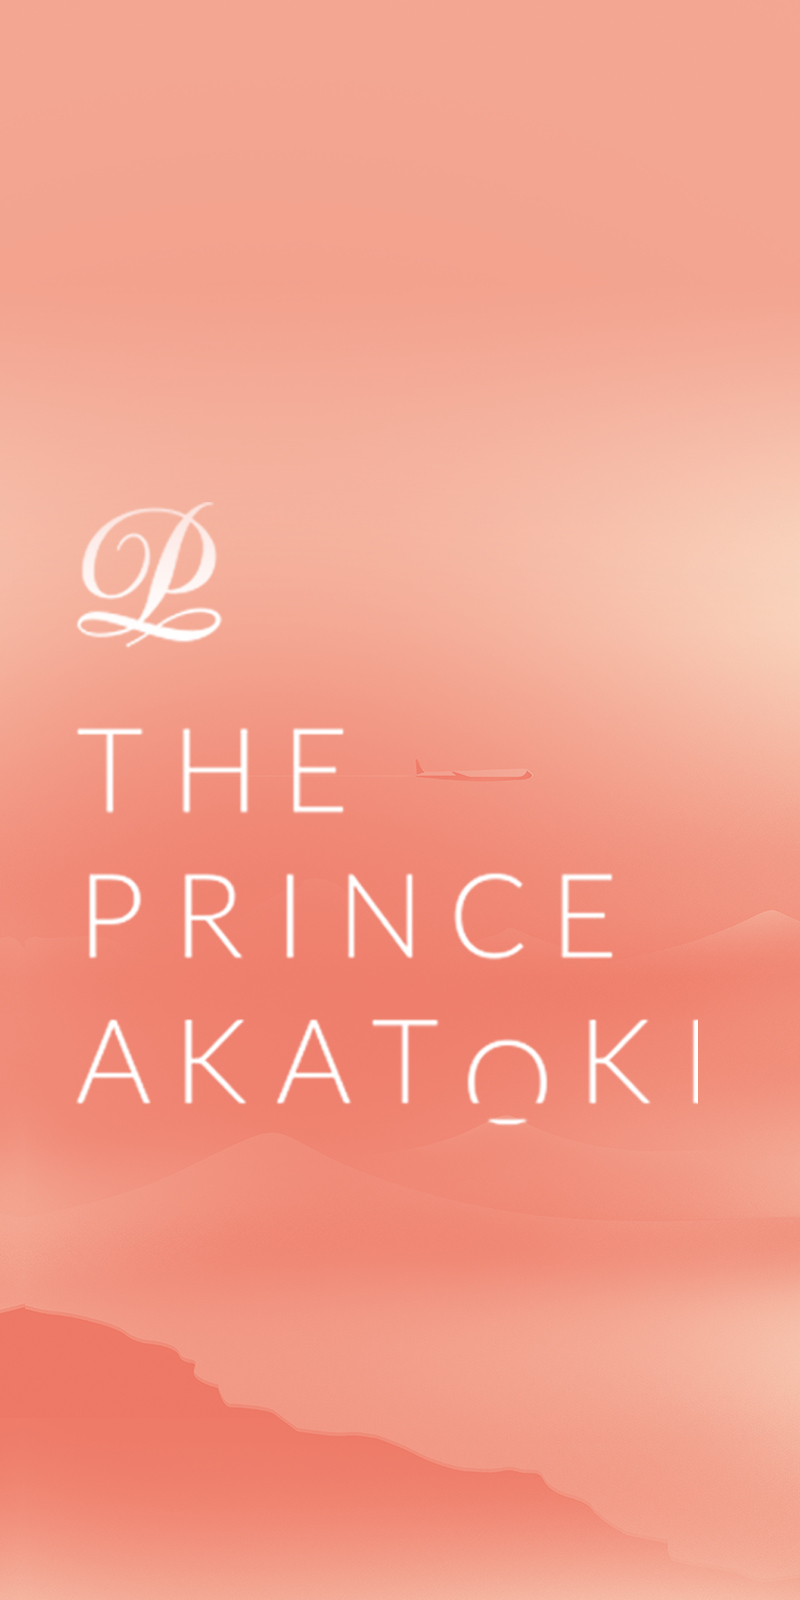 Prince Akatoki Brand Identity by Think Creative Agency